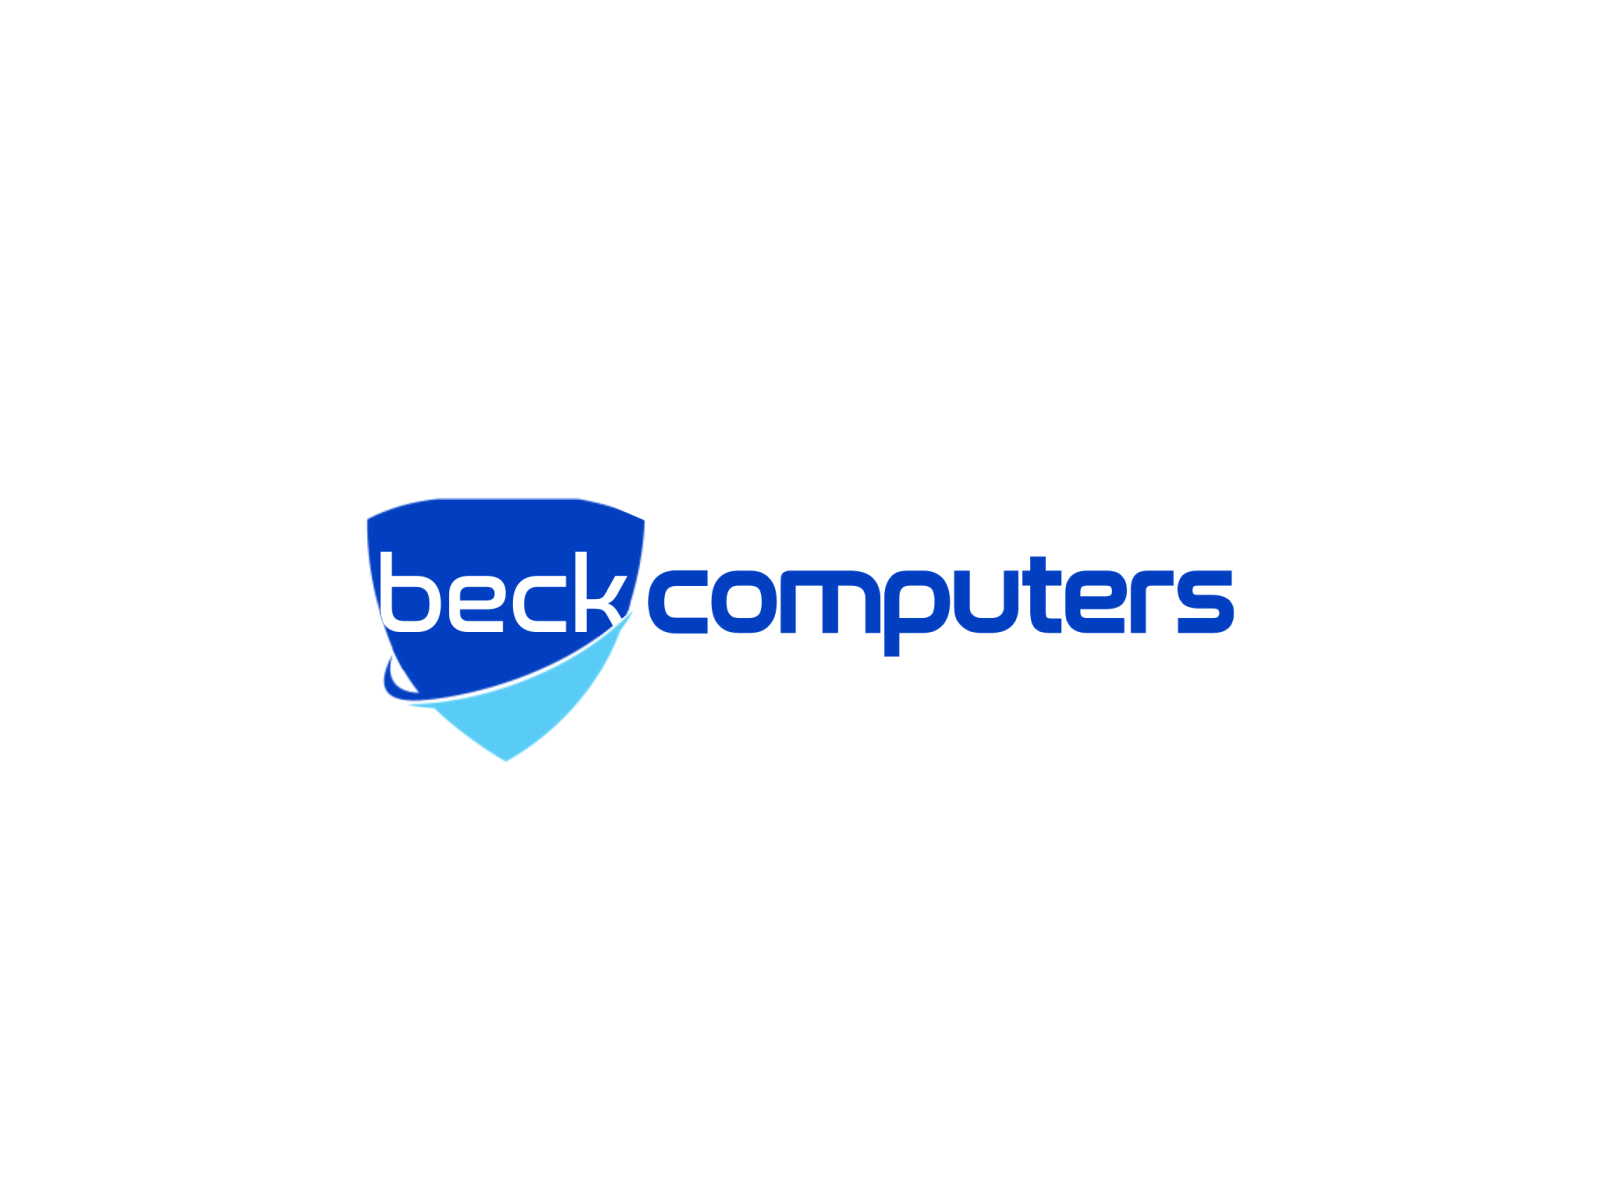 Beck Computers Logo animation (Landscape Version) Motion Graphic animated gif animated logo animation beck computers branding graphic design logo logo animation motion graphics